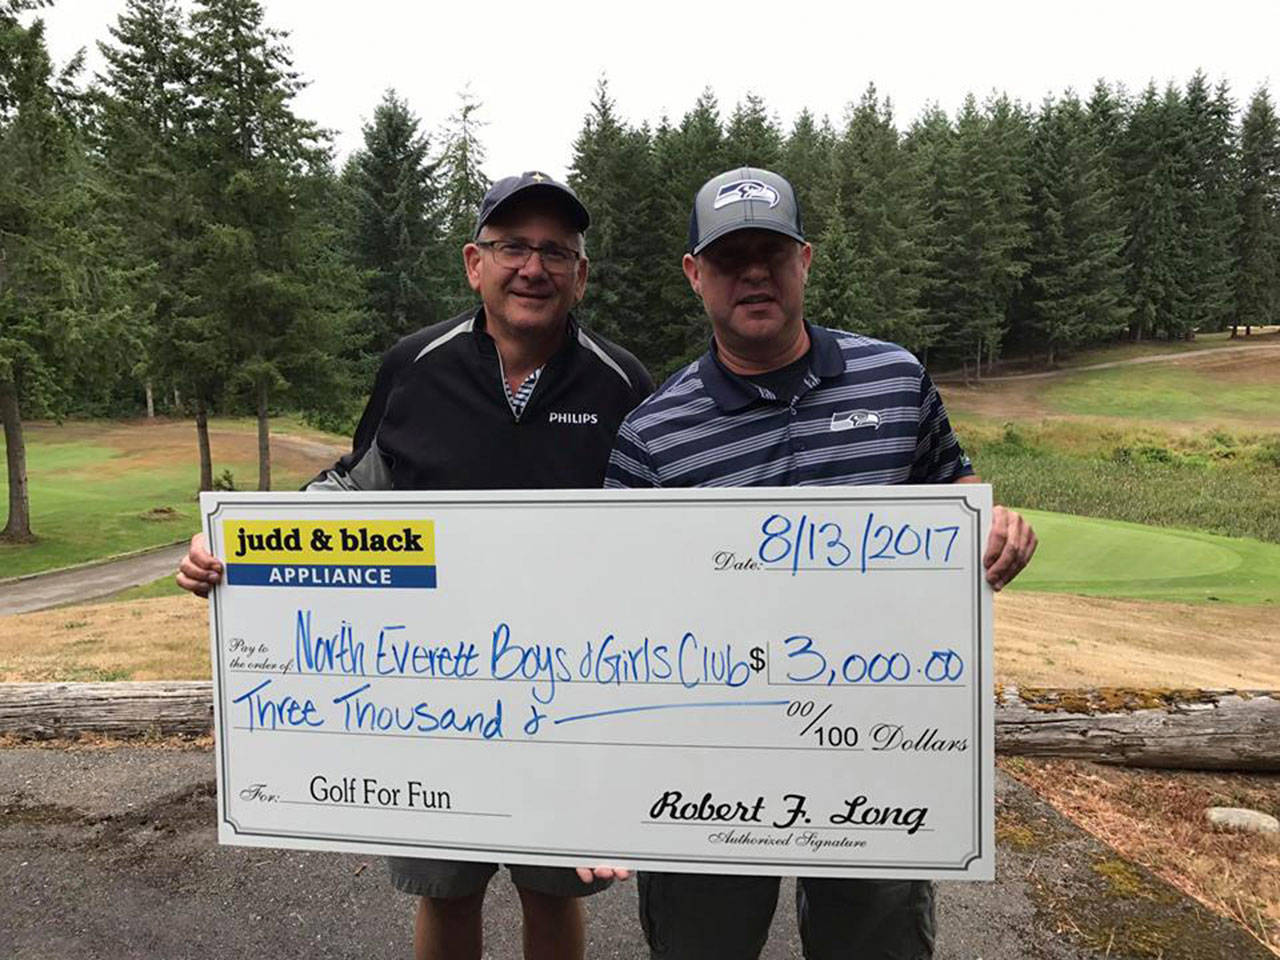 Torneo de golf Judd Black beneficia al North Everett Boys Girls Club